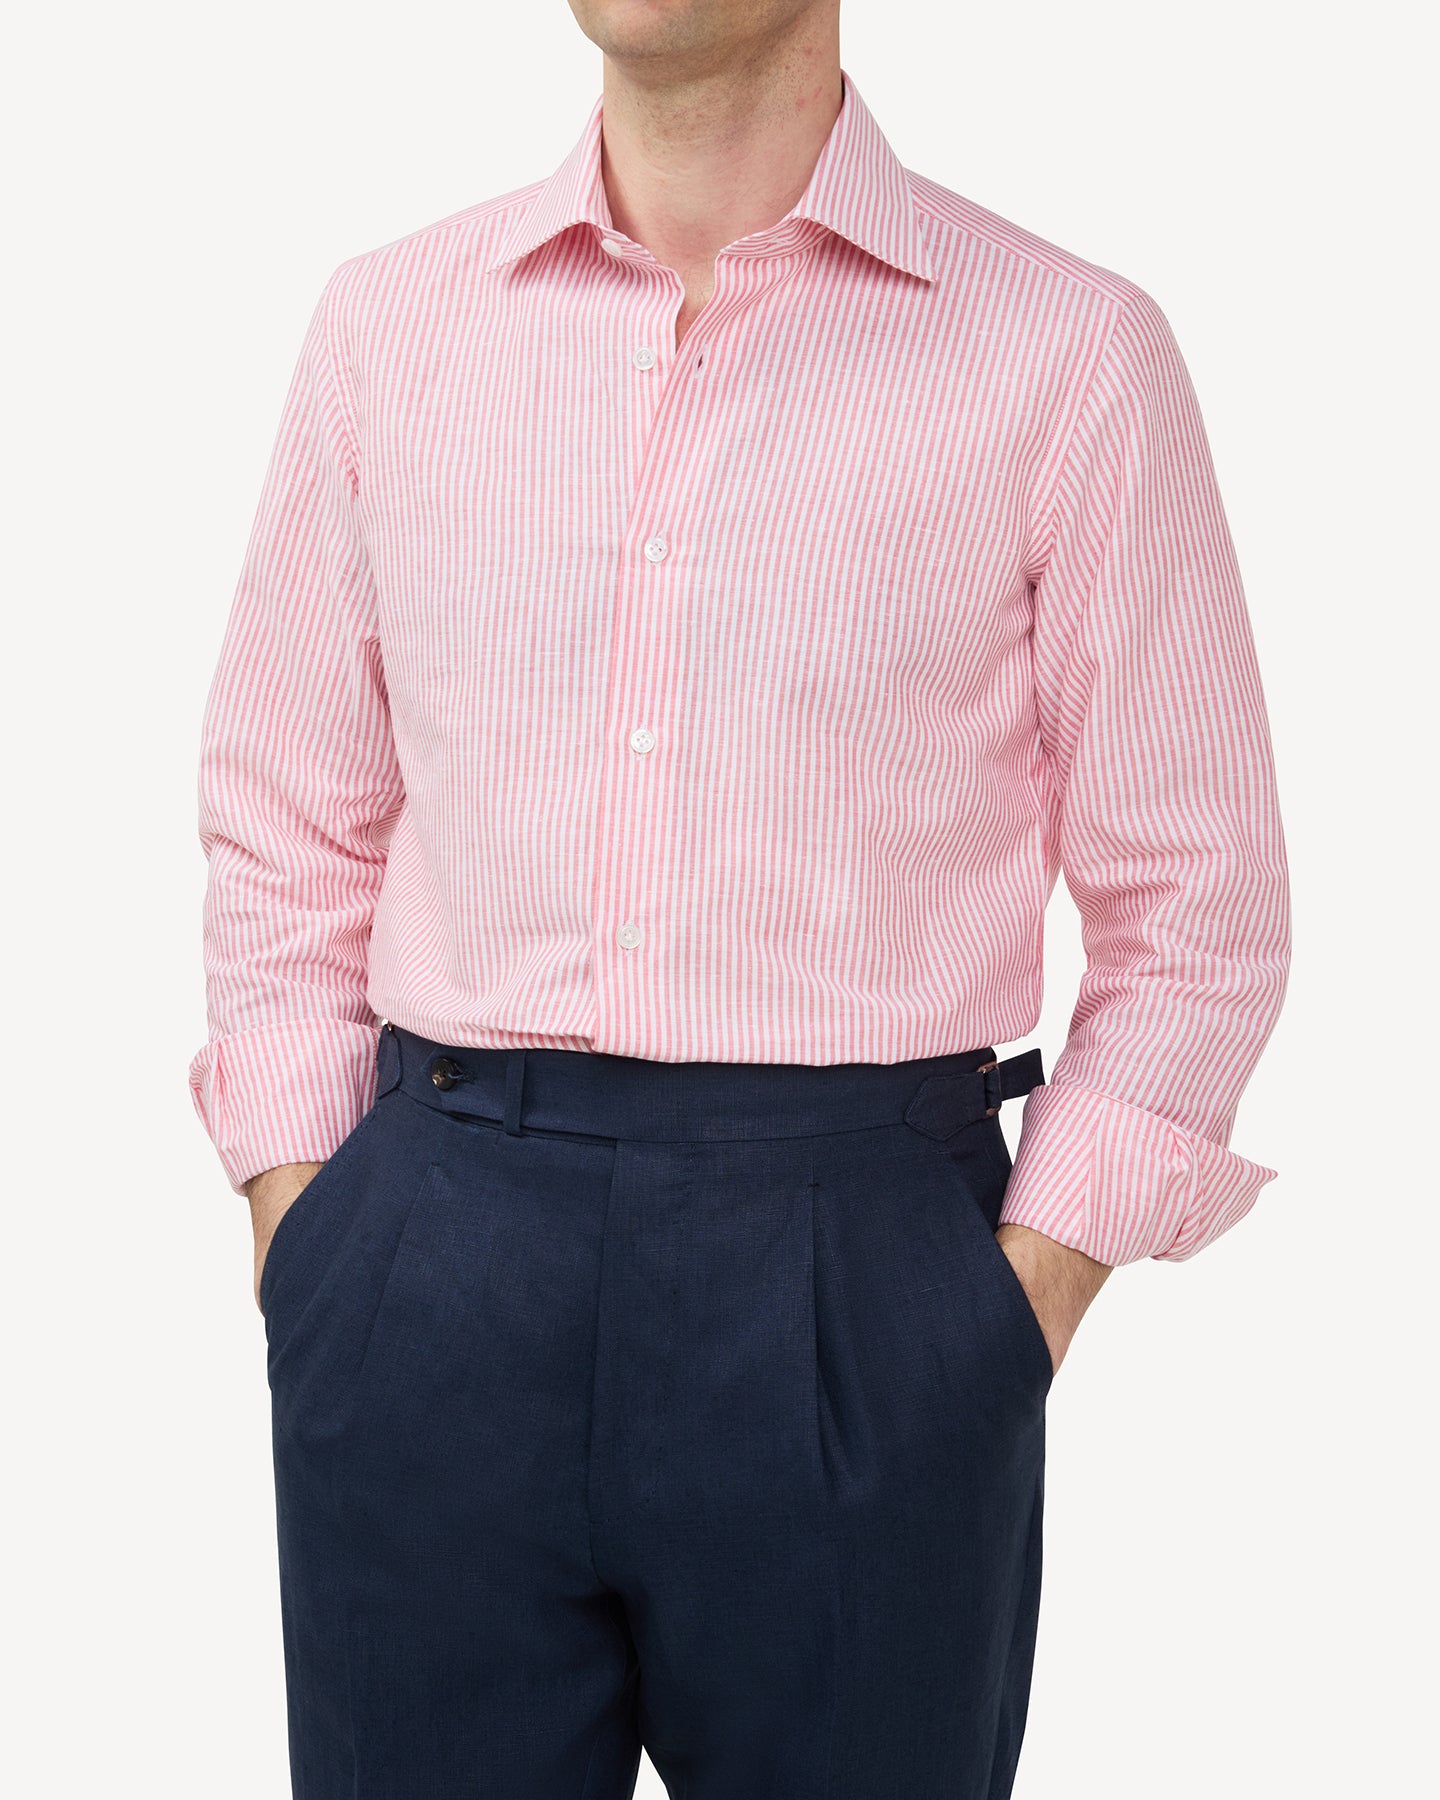 Man wearing a red bengal stripe cotton linen shirt and navy linen trousers